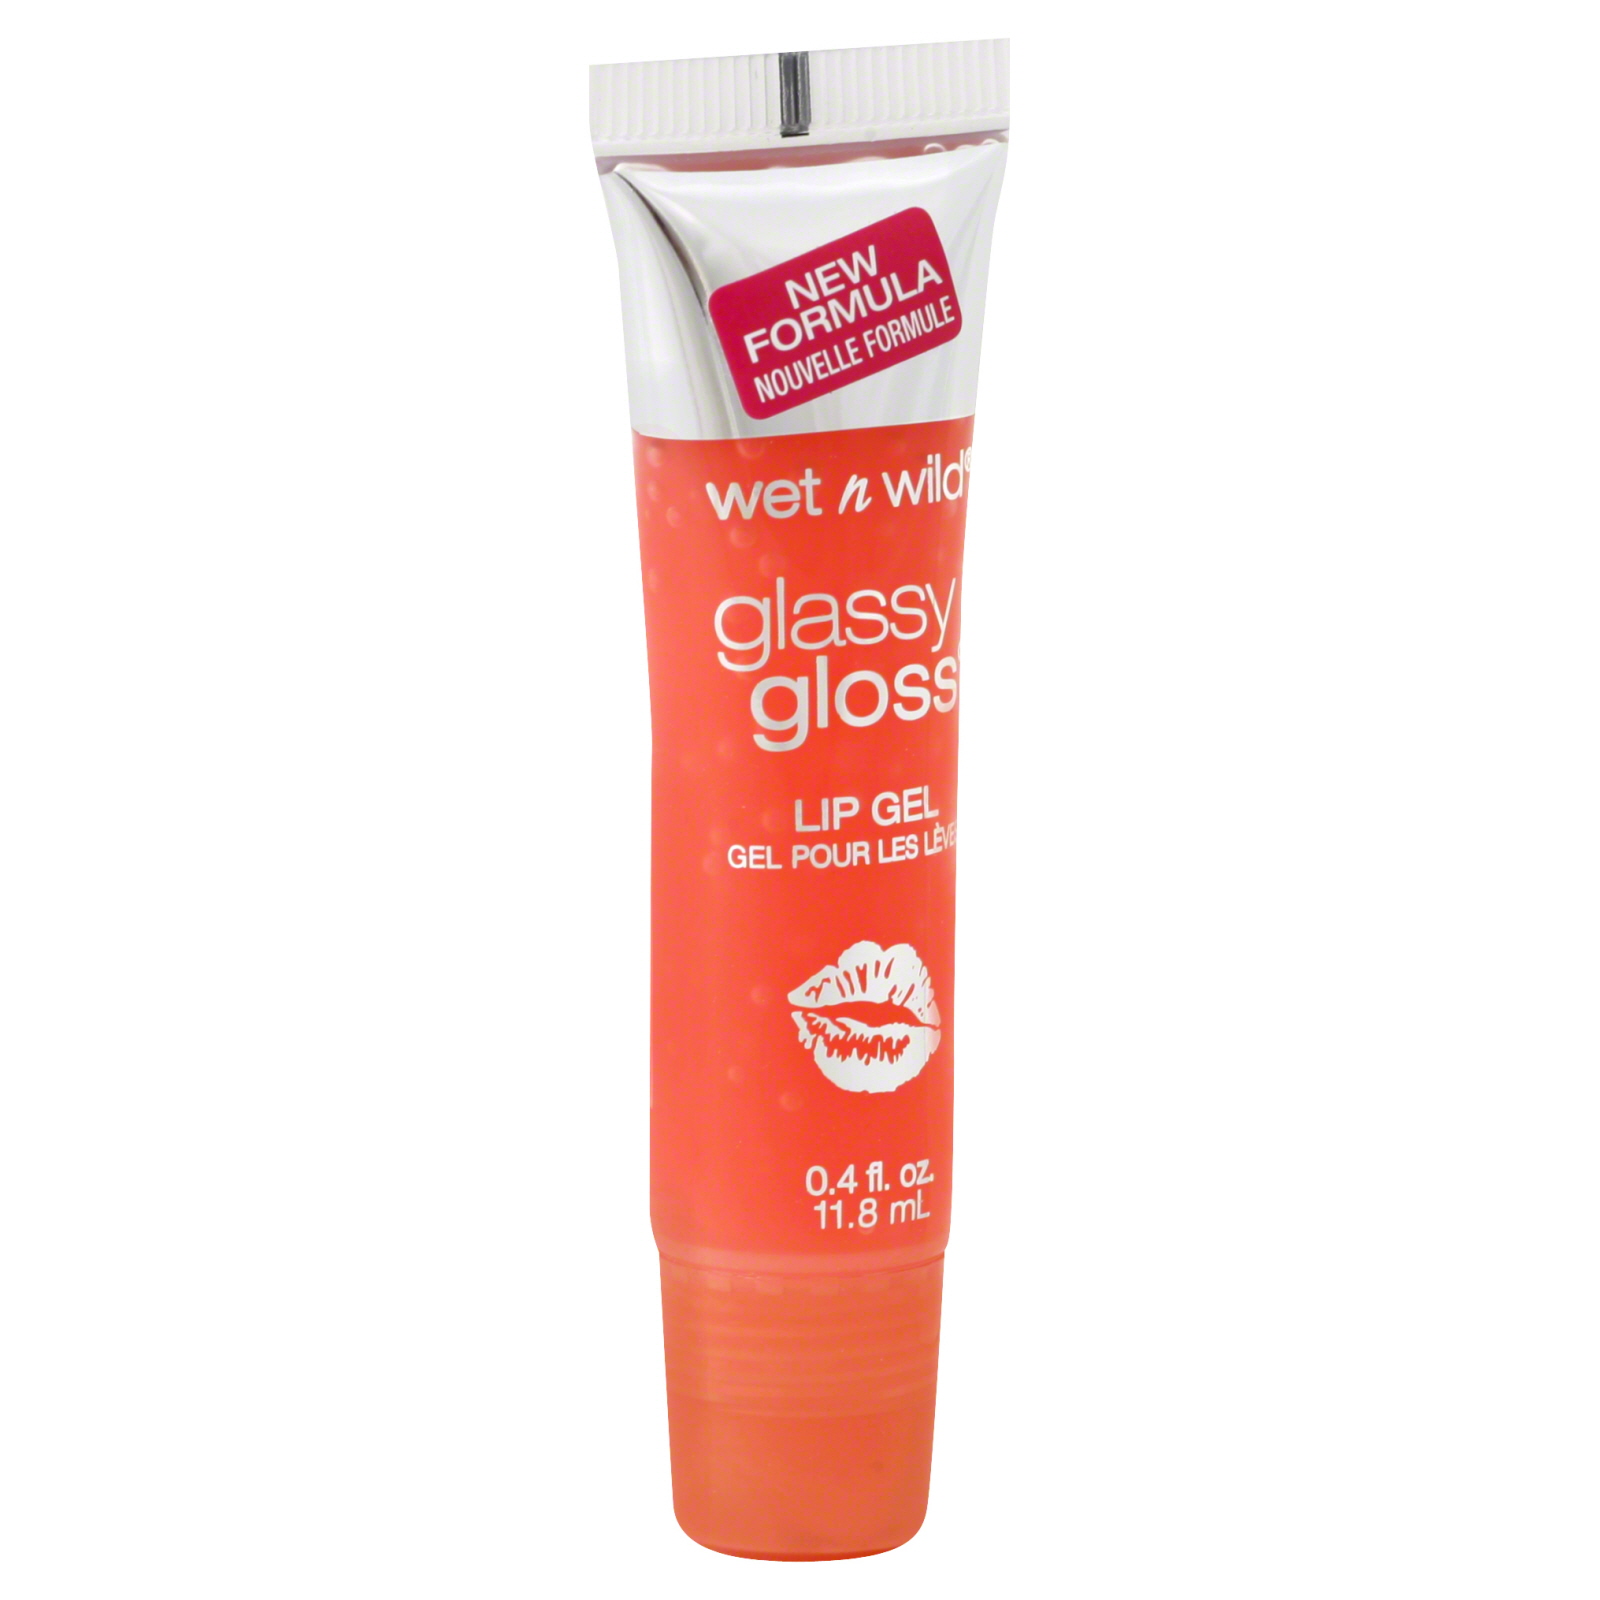 Glassy Gloss Lip Gel, Mow the Glass 314A, 0.4 fl oz (11.8 ml)